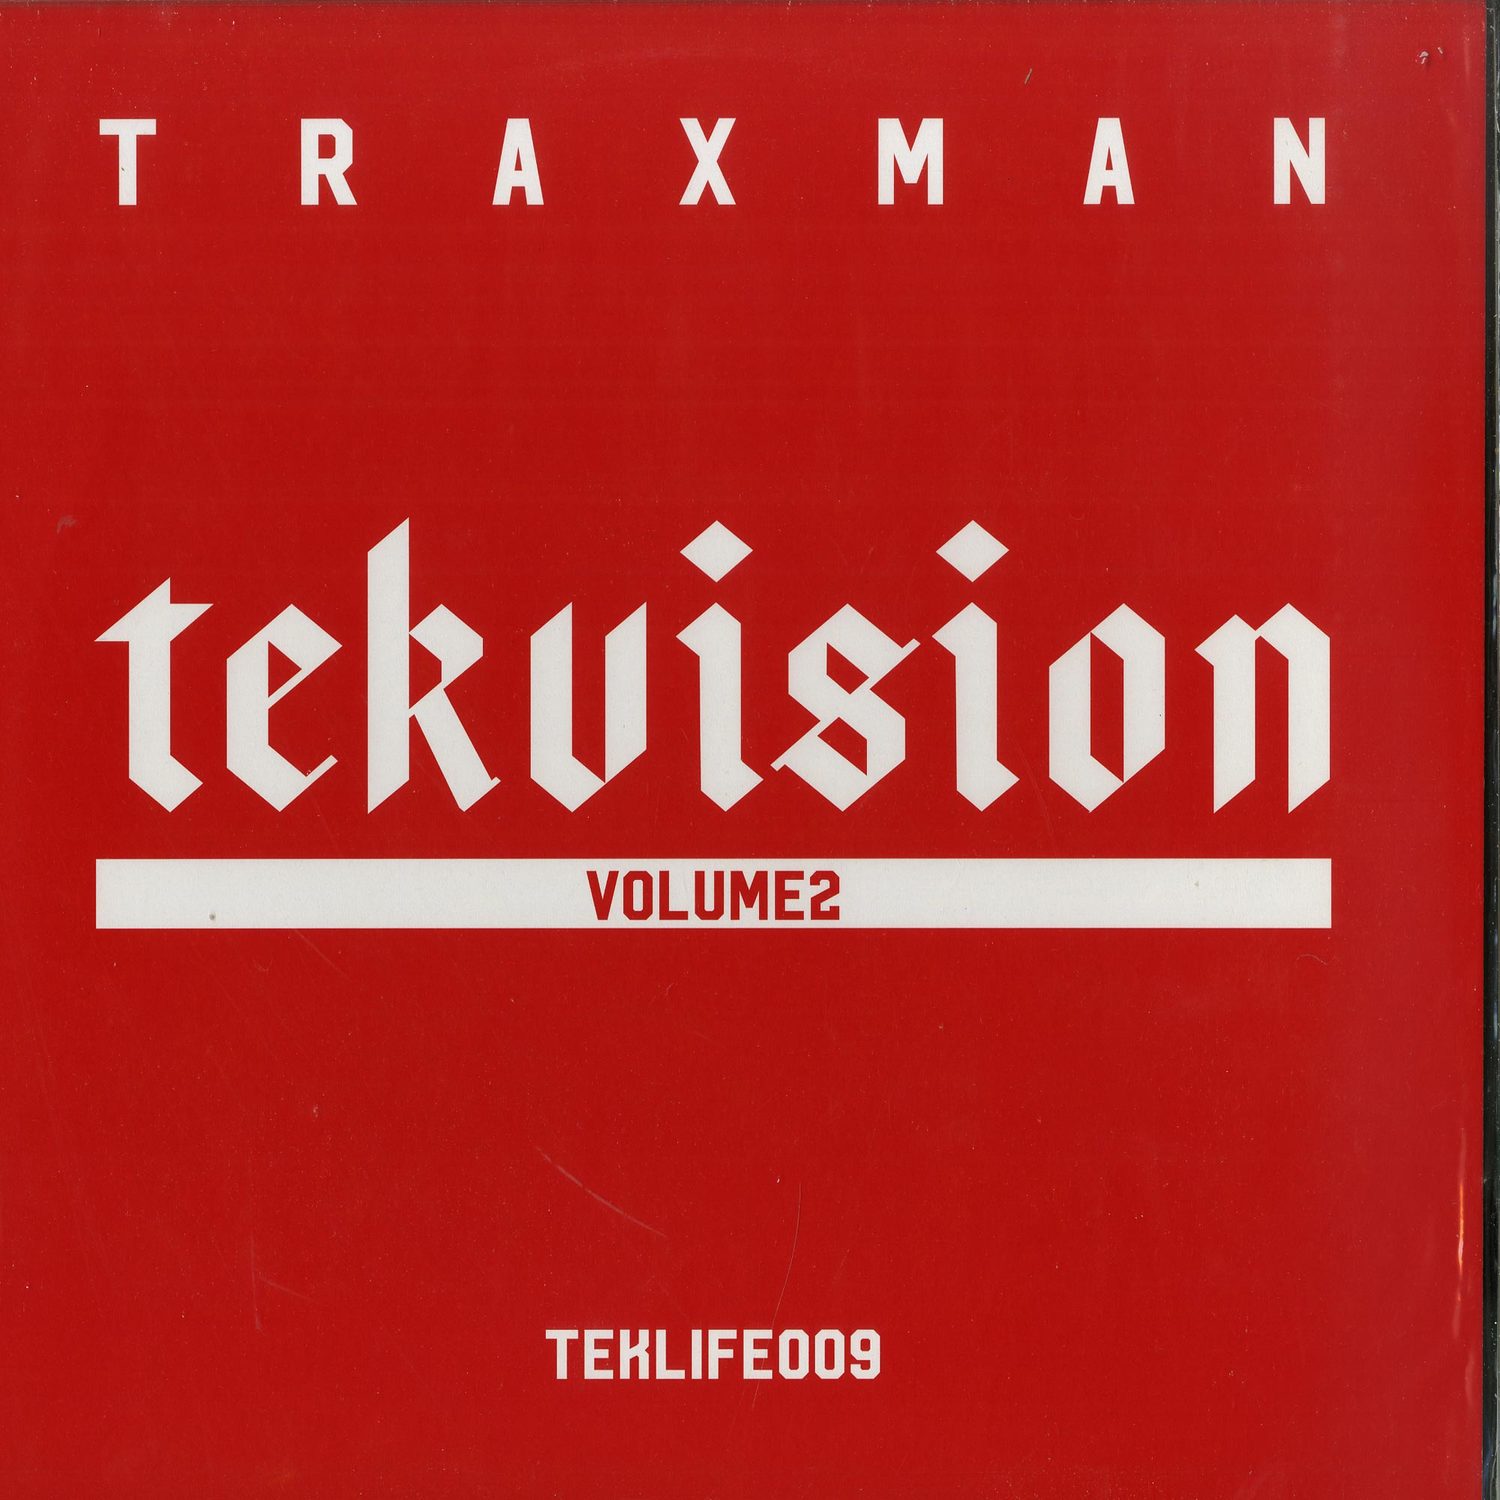 Traxman - TEKVISION VOL. 2 